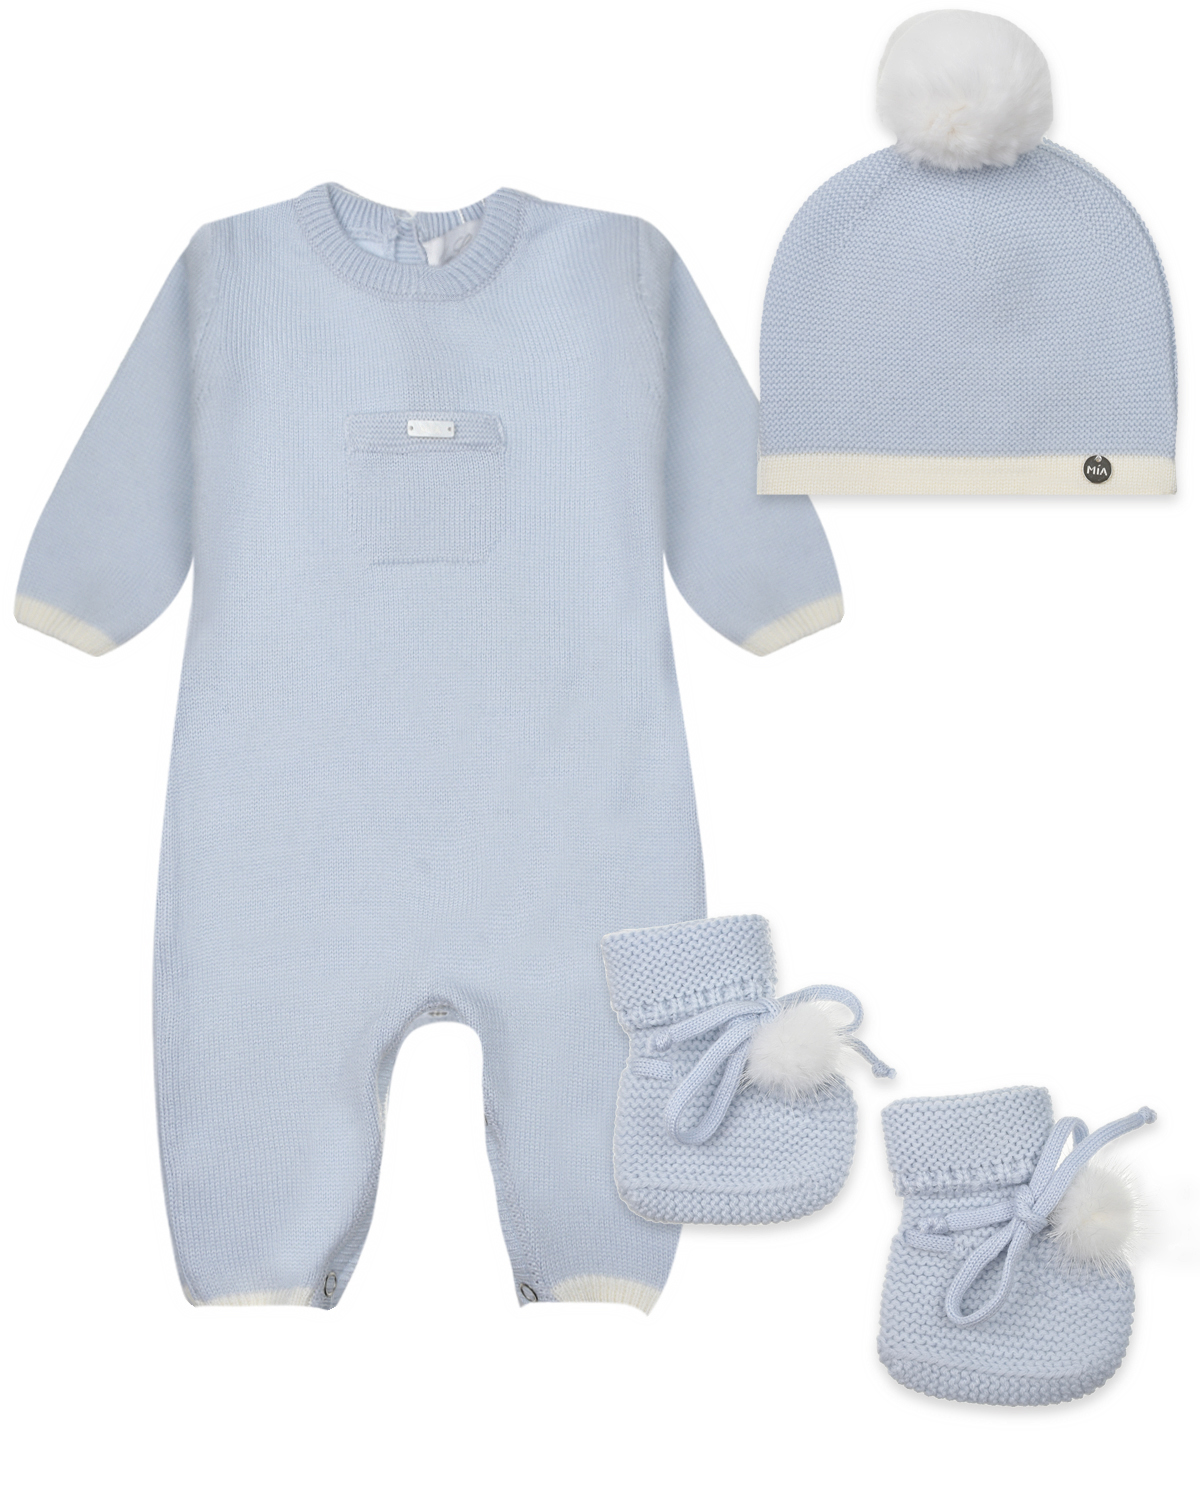 Комплект: комбинезон, шапочка и пинетки, цвет голубой Miacompany детский